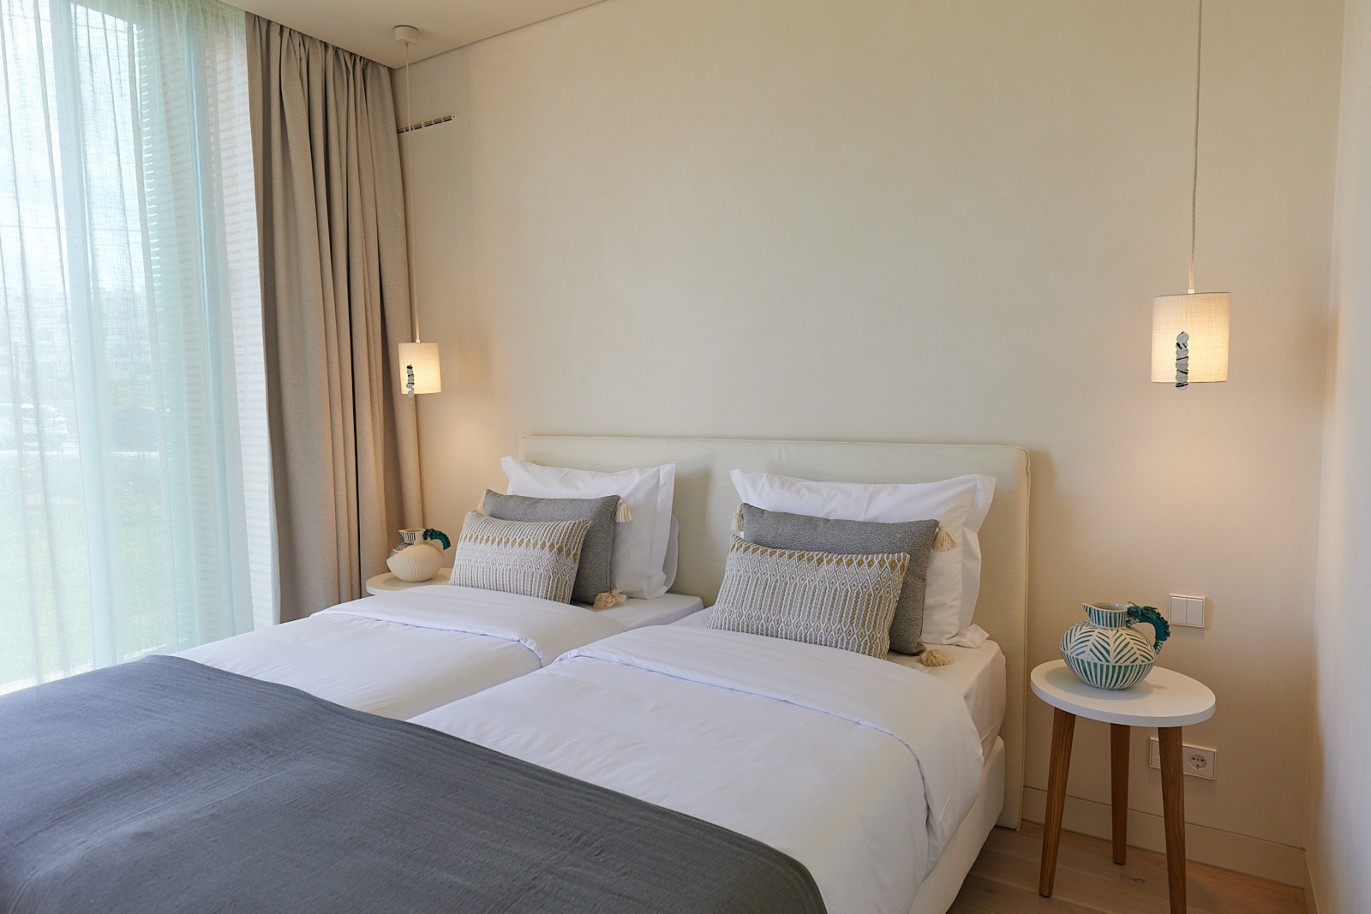 2 bedroom apartment in resort, for sale in Porches, Algarve_229098